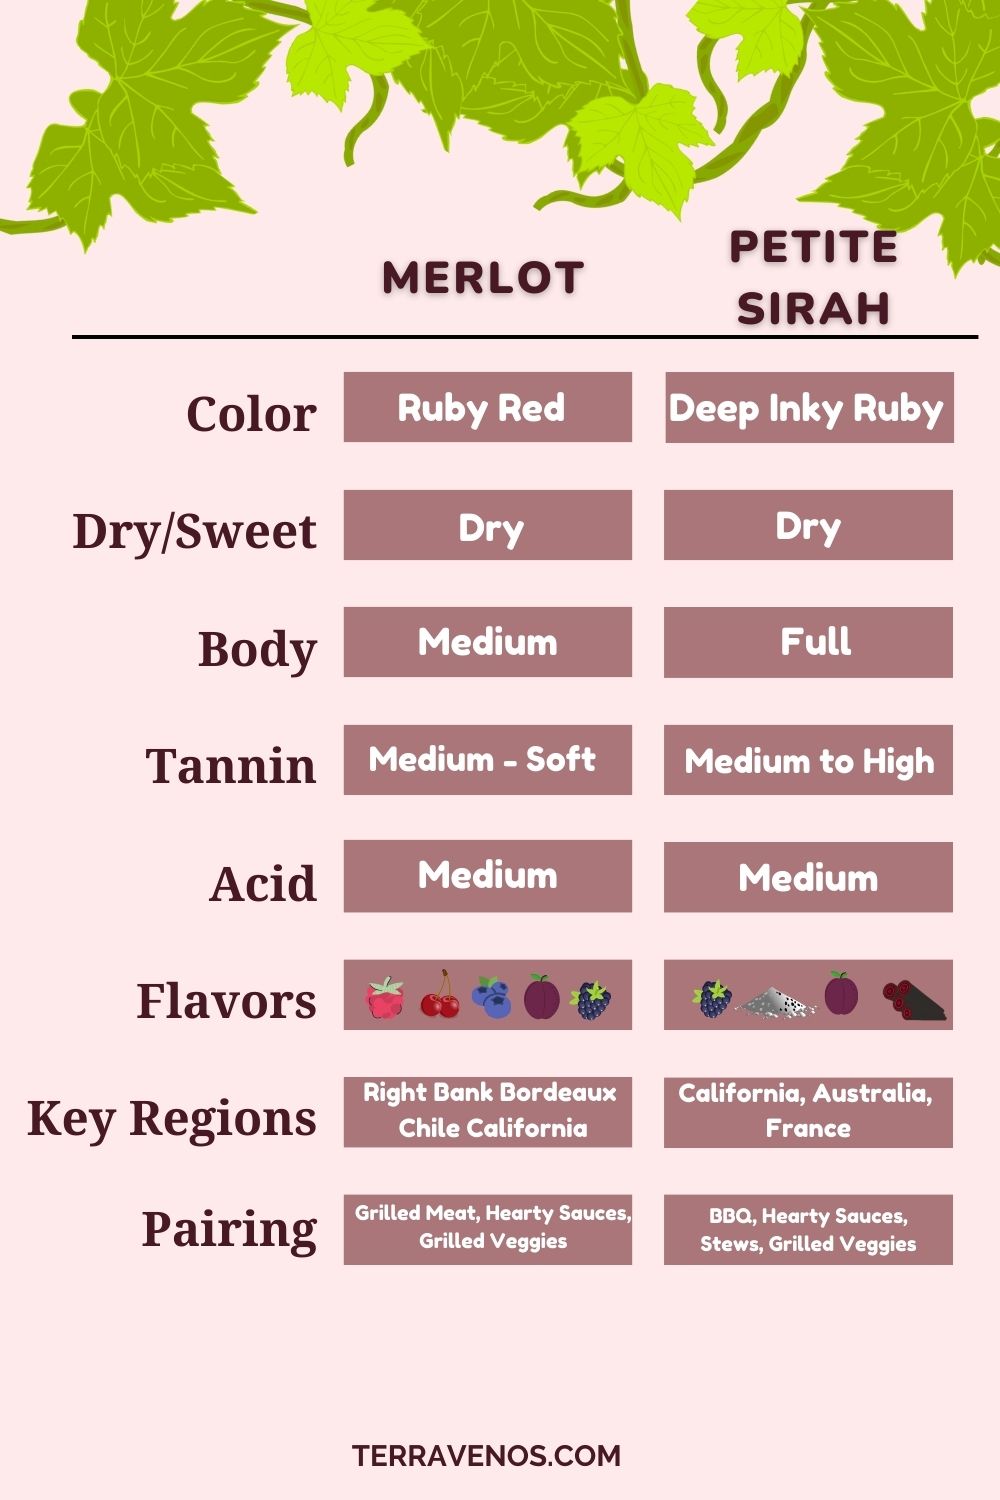 merlot-vs-petite-sirah-wine-comparison-infographic